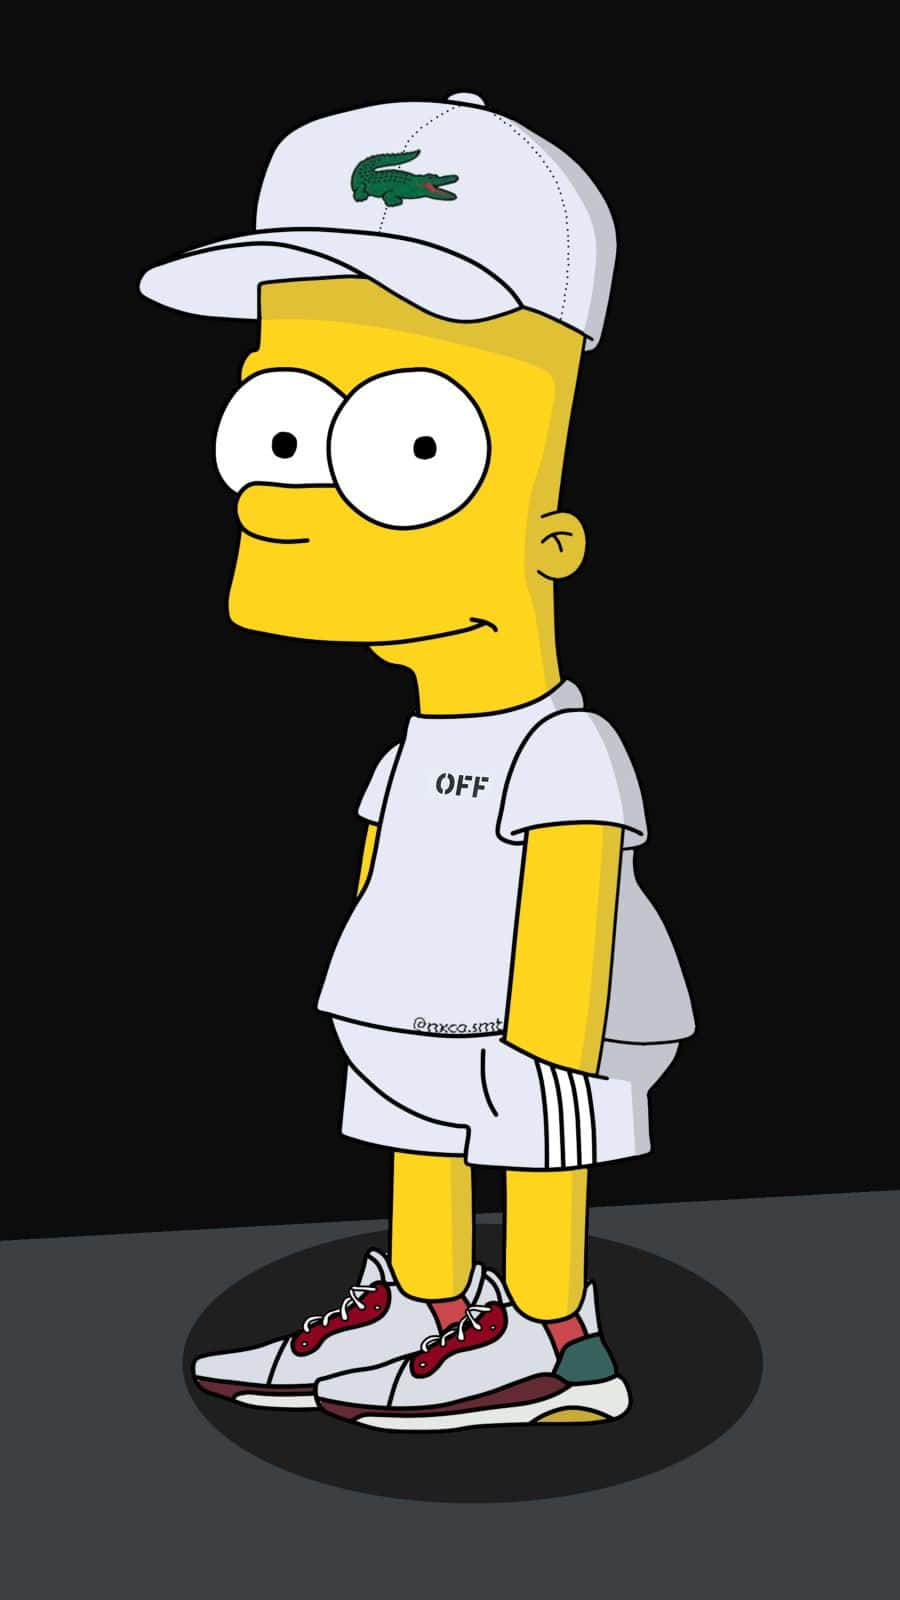 Cool Bart Simpson Offwhite Supreme Wallpaper